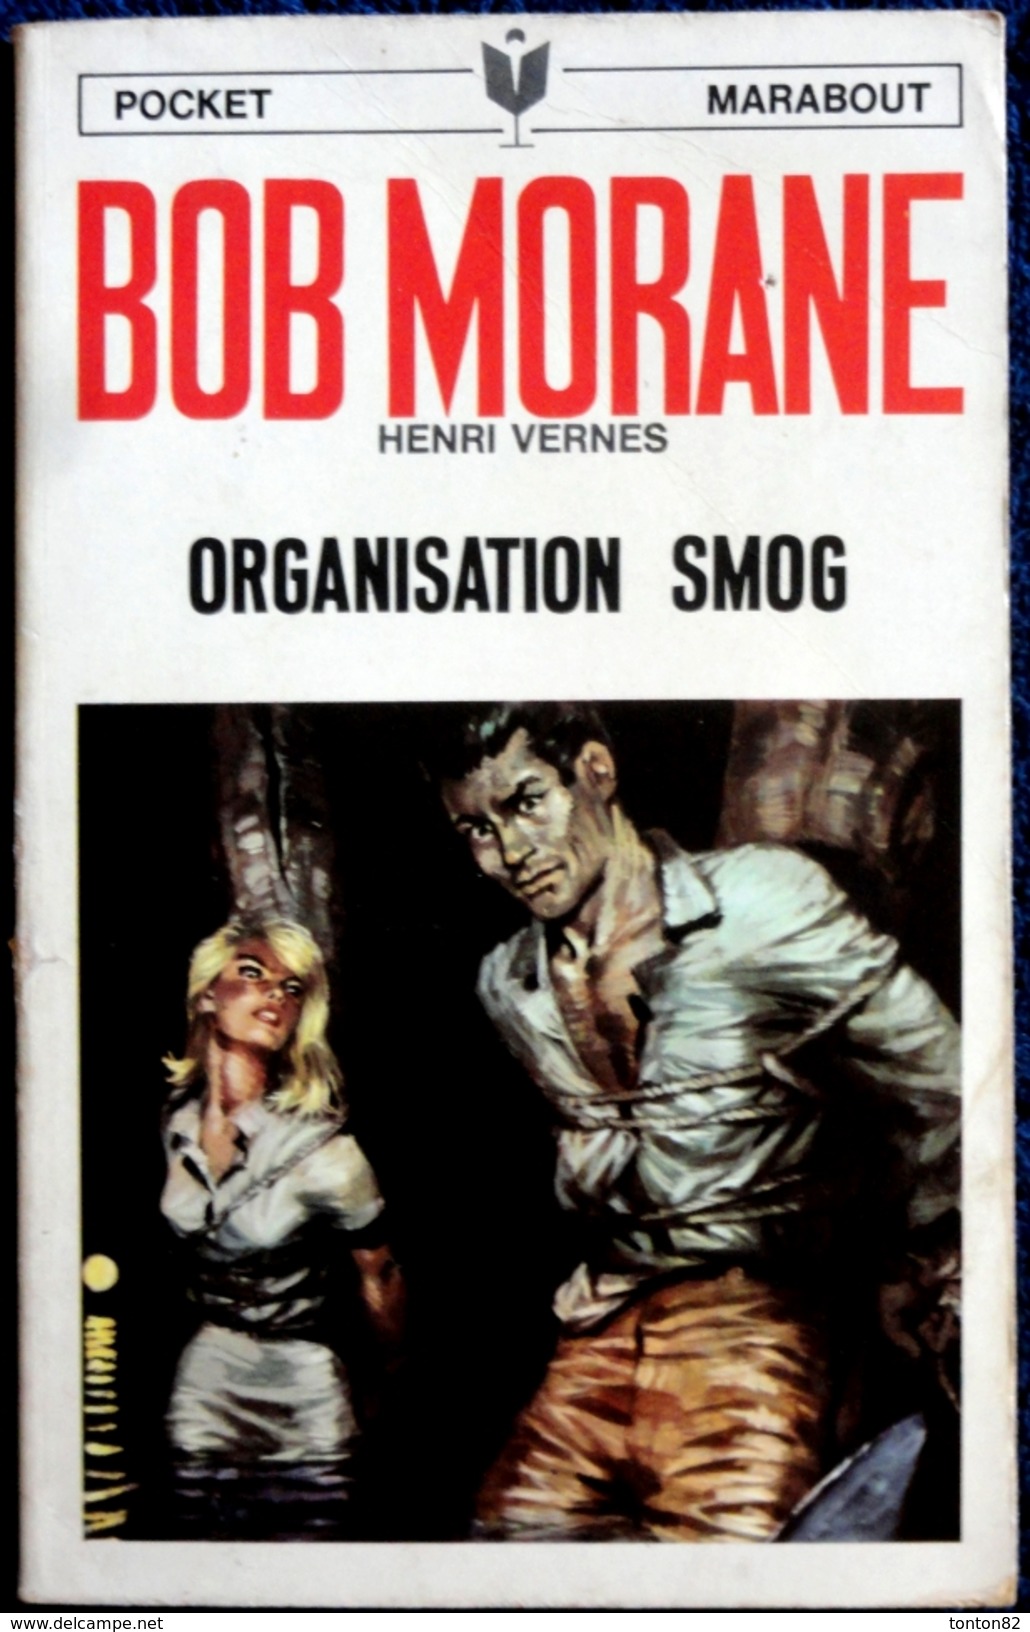 Bob Morane  - Organisation SMOG  - Henri Vernes - Pocket Marabout  N° 1039 / 78 - Marabout Junior